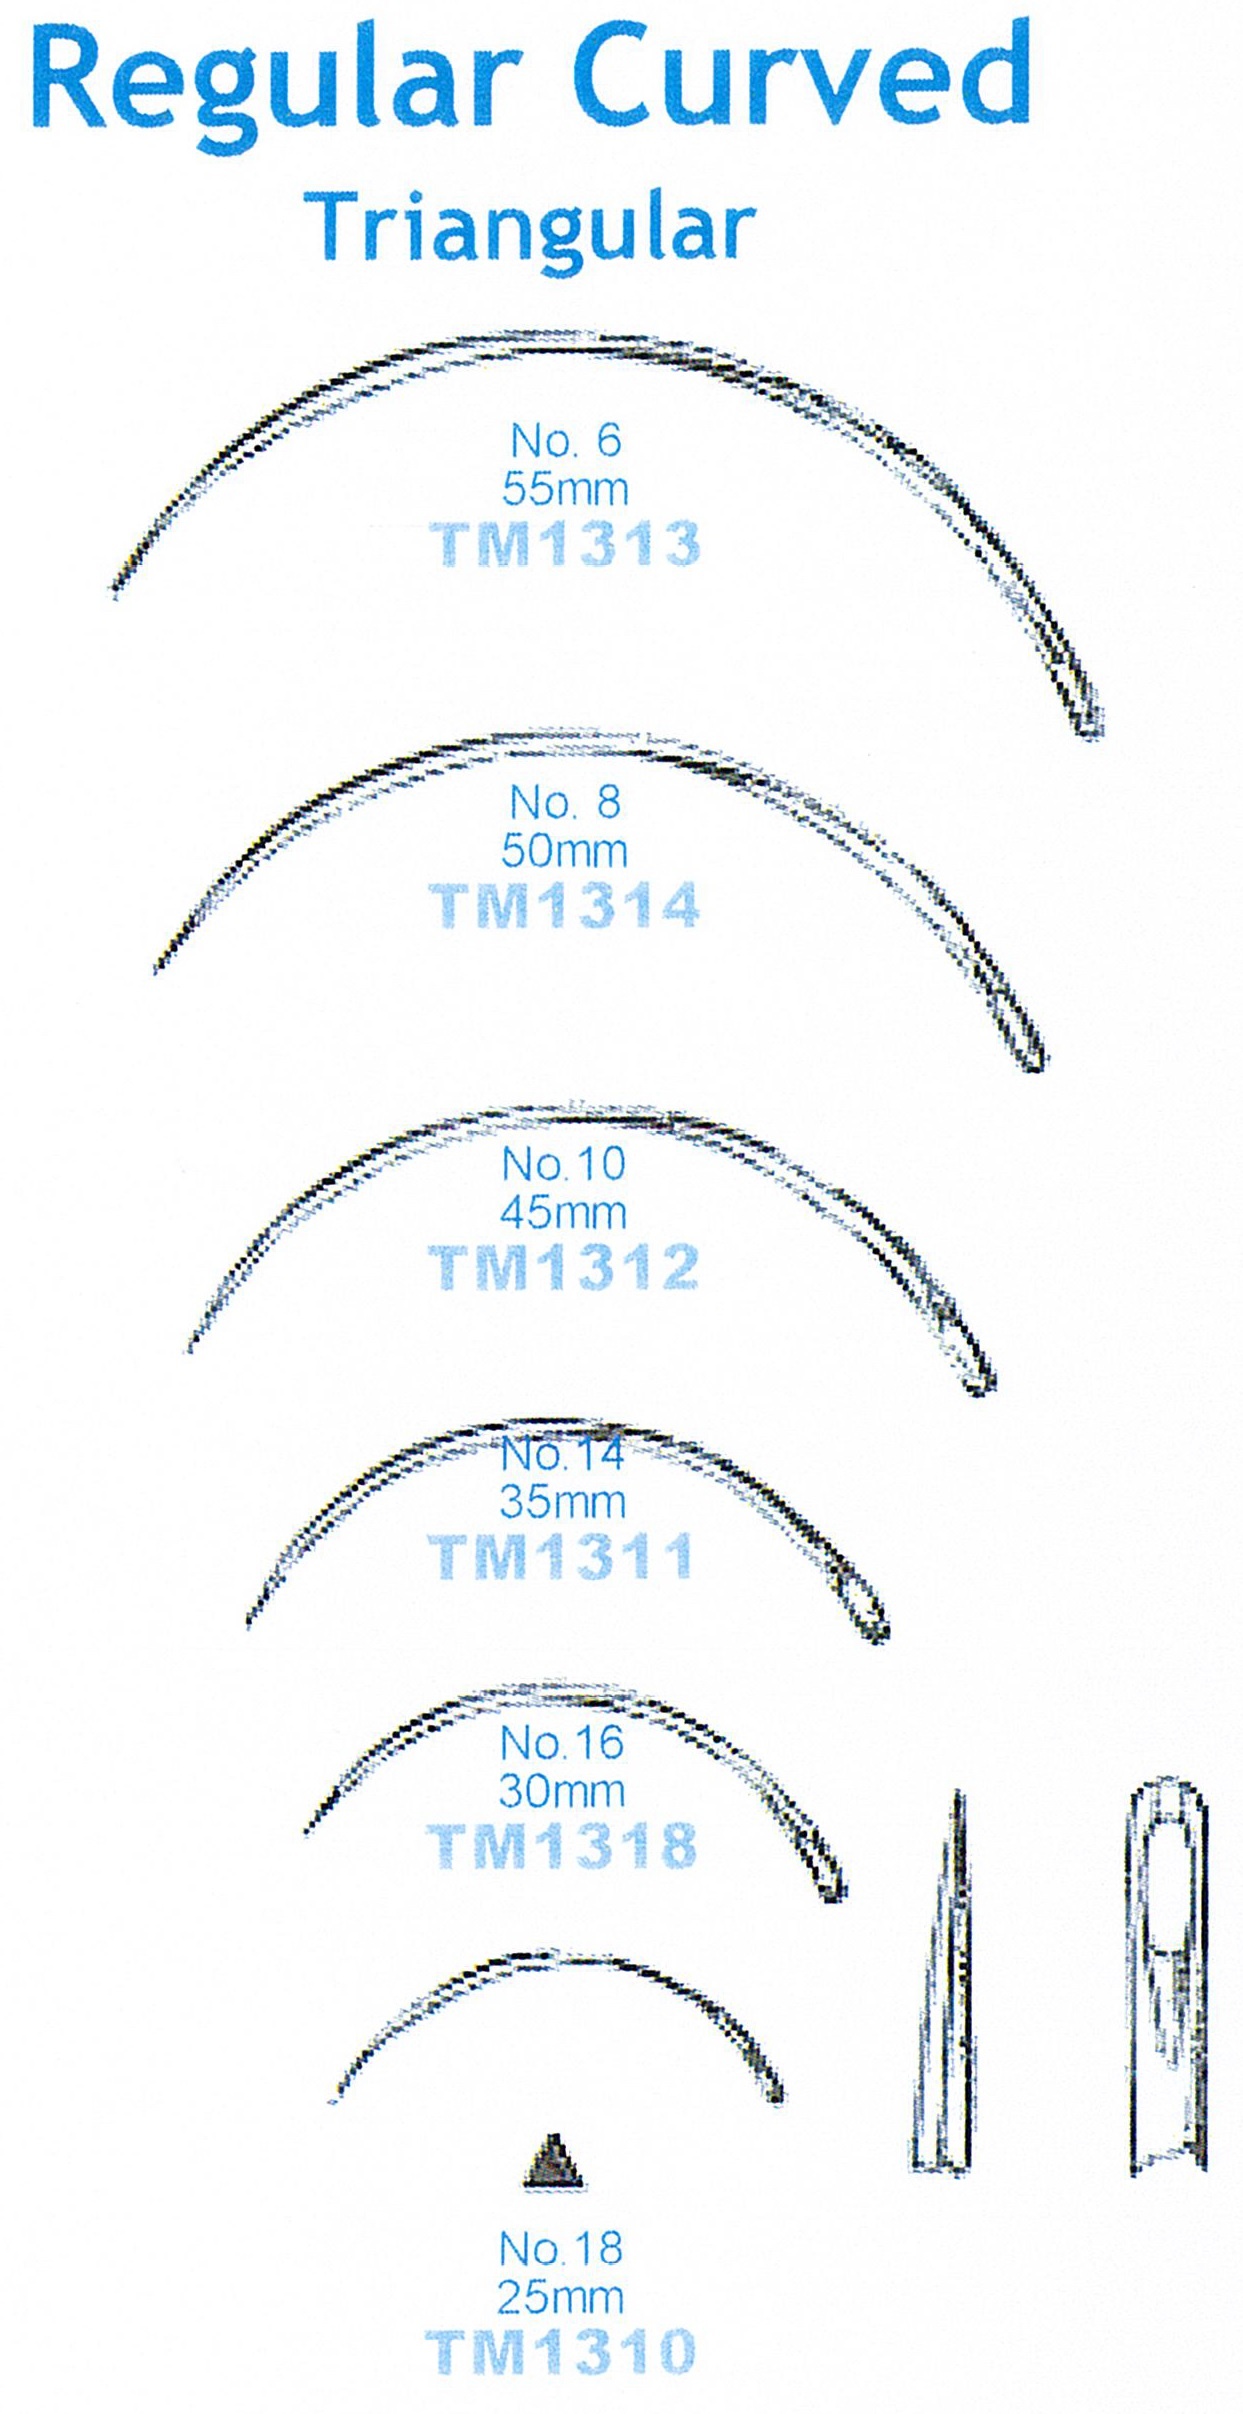 KAT-Eyed Regular Curved Triangular 55mm No.6 Pkt of 2